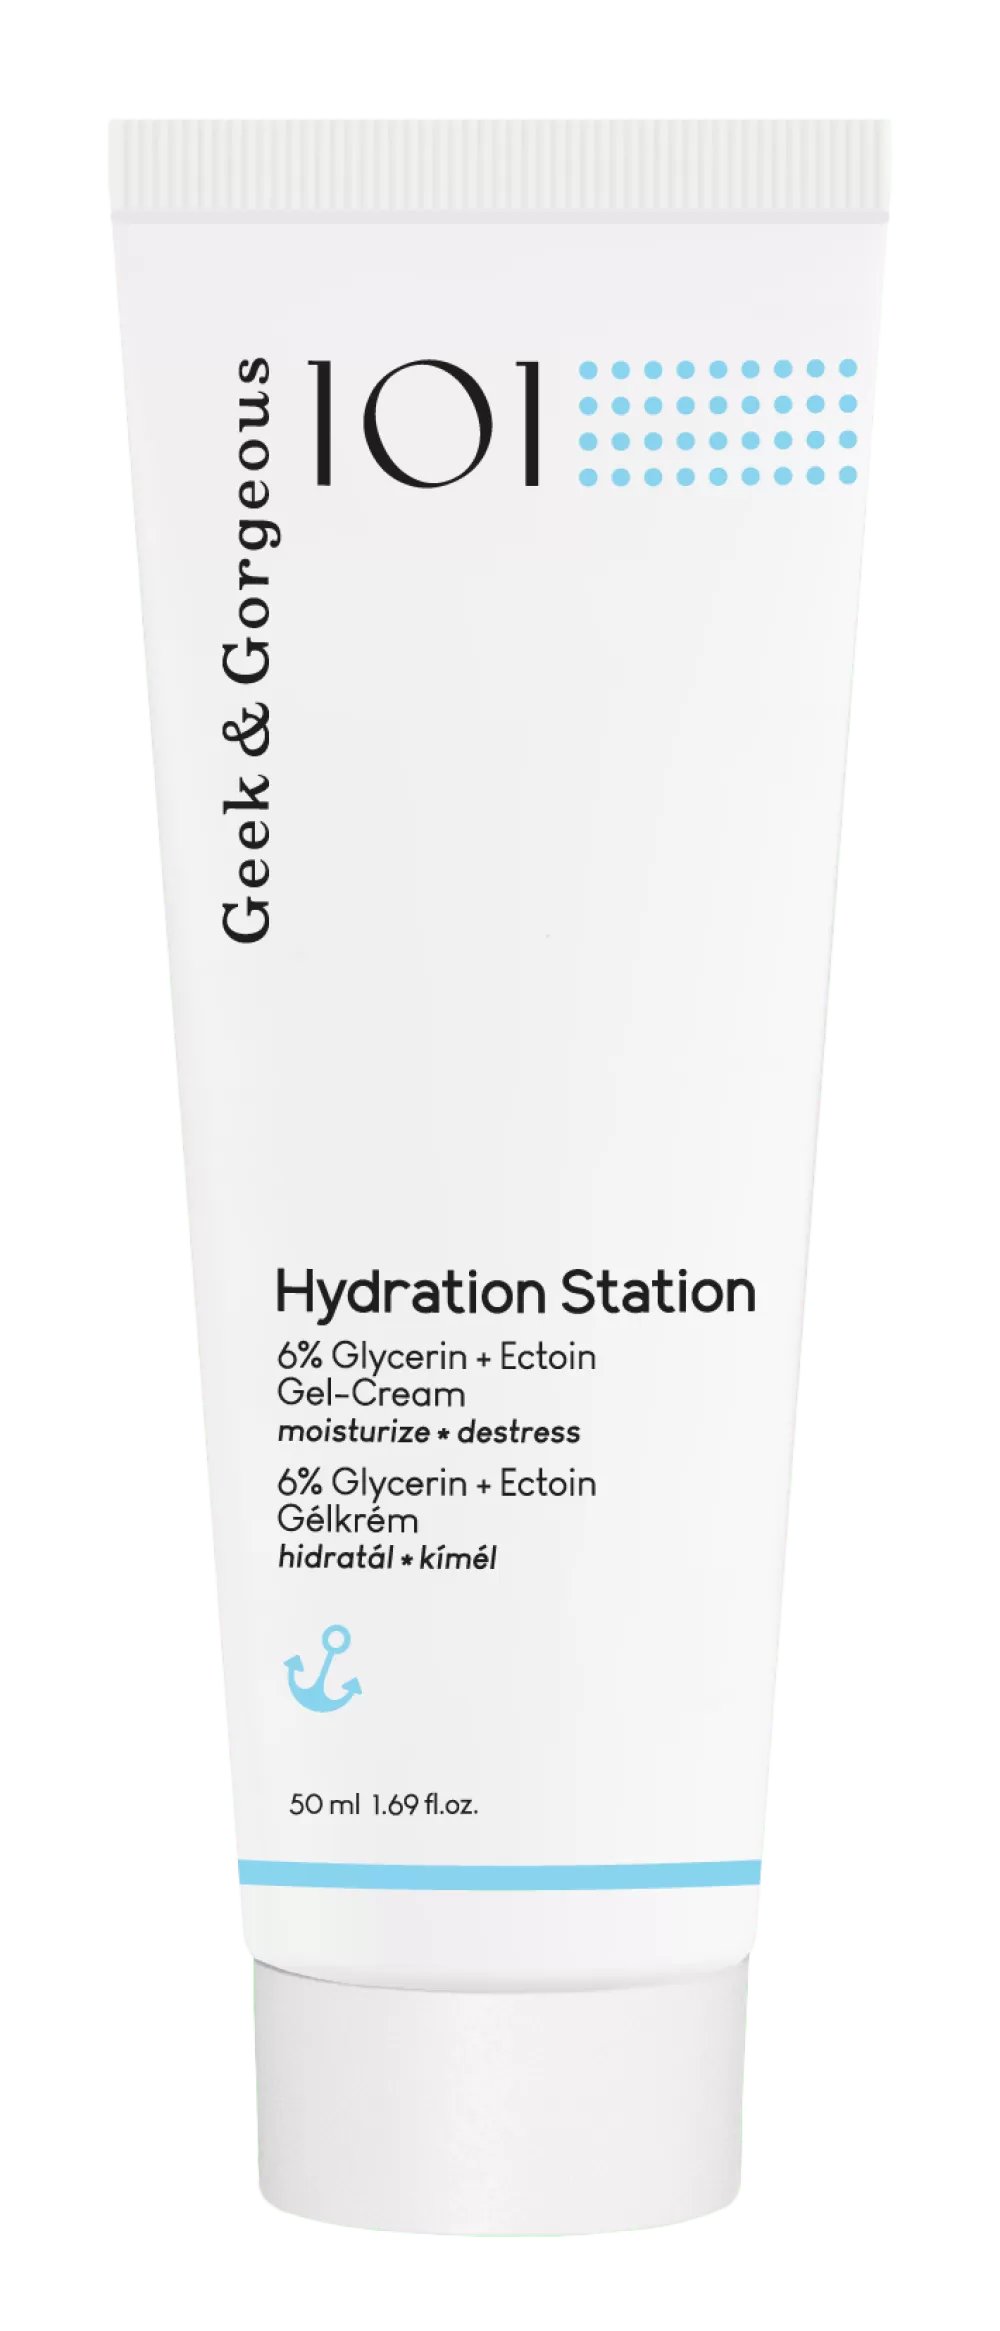 Crema hidratanta Hydration Station 6 % Glicerina + Ectoina, 50 ml, Geek&Gorgeous